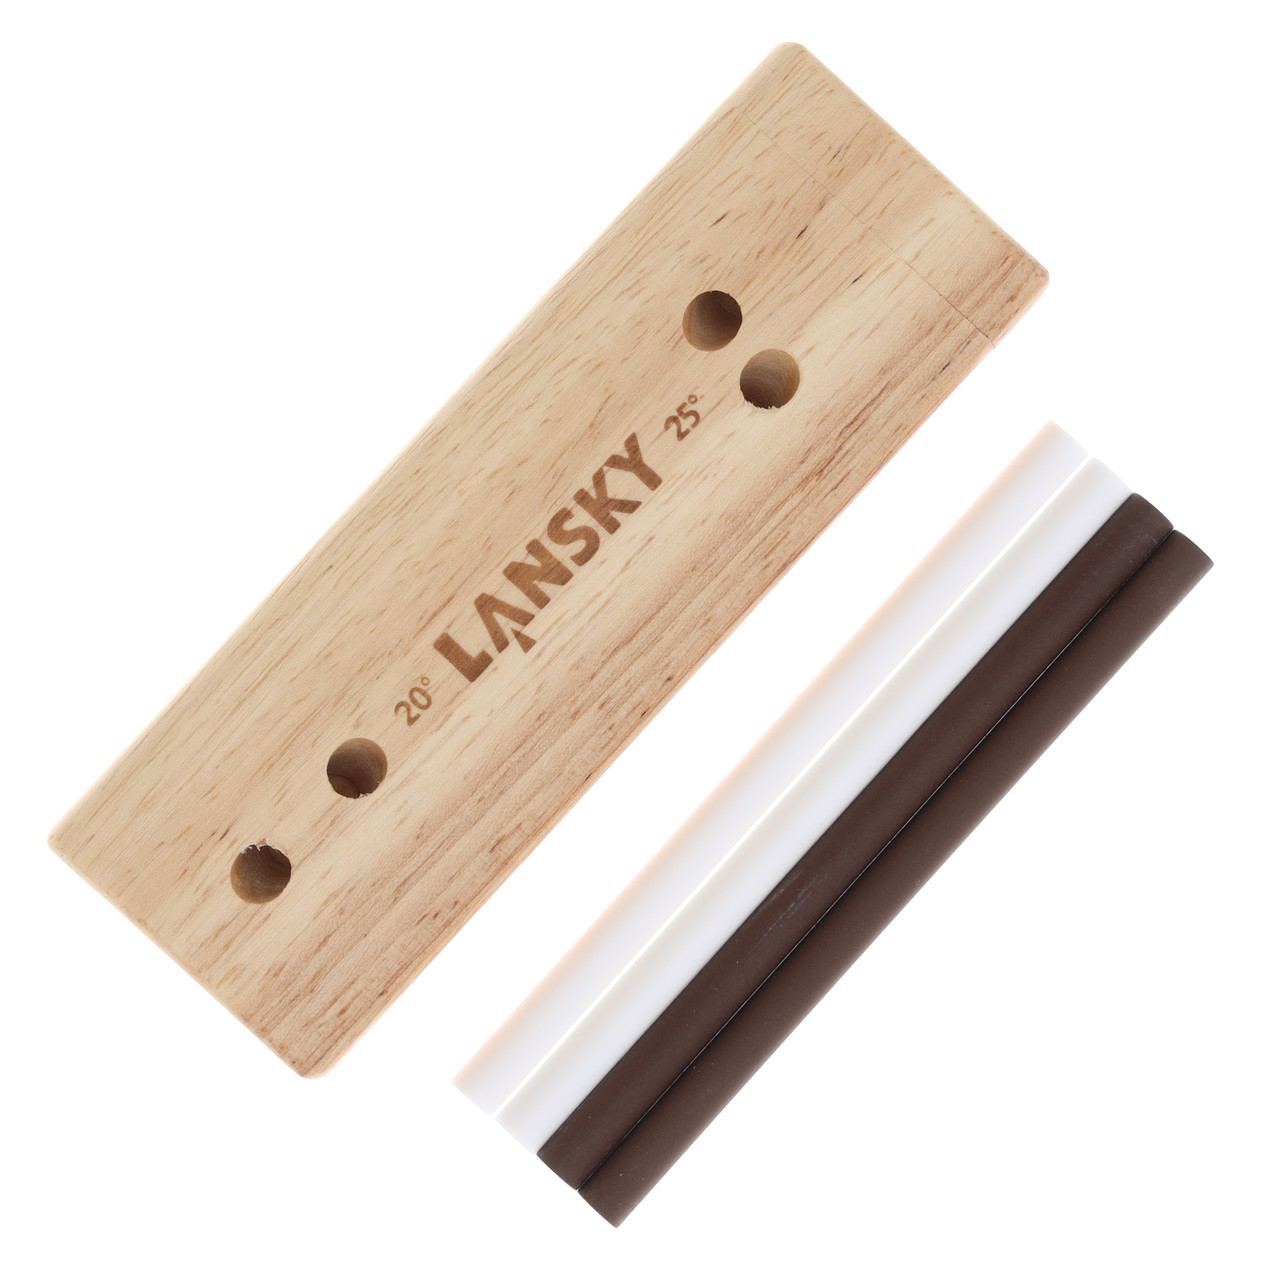 Lansky Sharpeners Turn-Box Crock Stick Sharpener